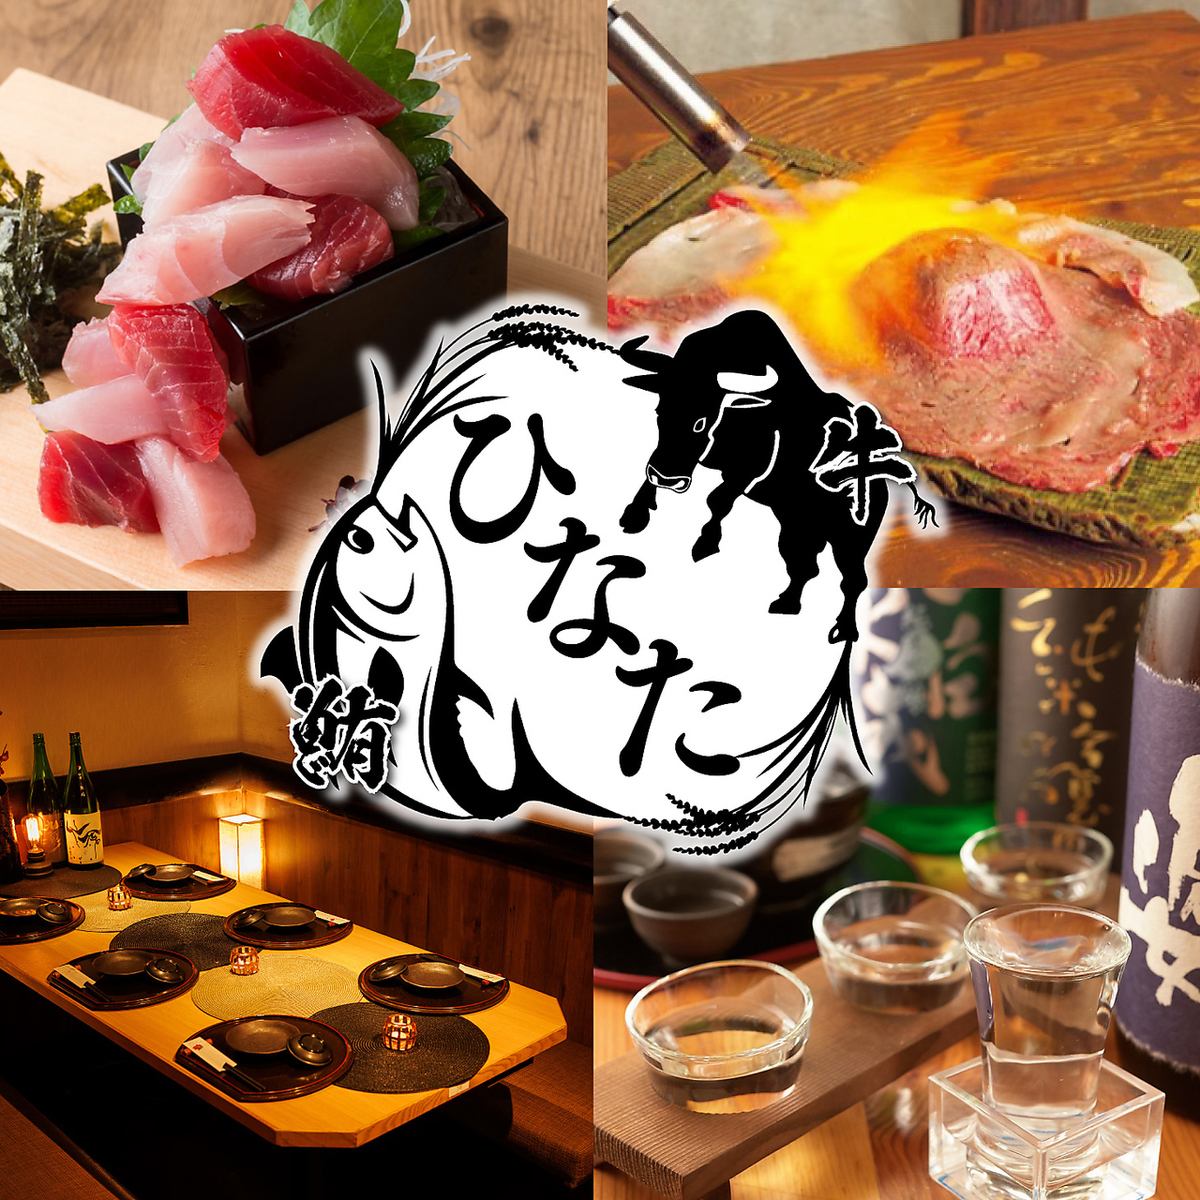 ■Bluefin tuna x Wagyu beef Hinata ■Banquet/entertainment/Online reservation 24 hours